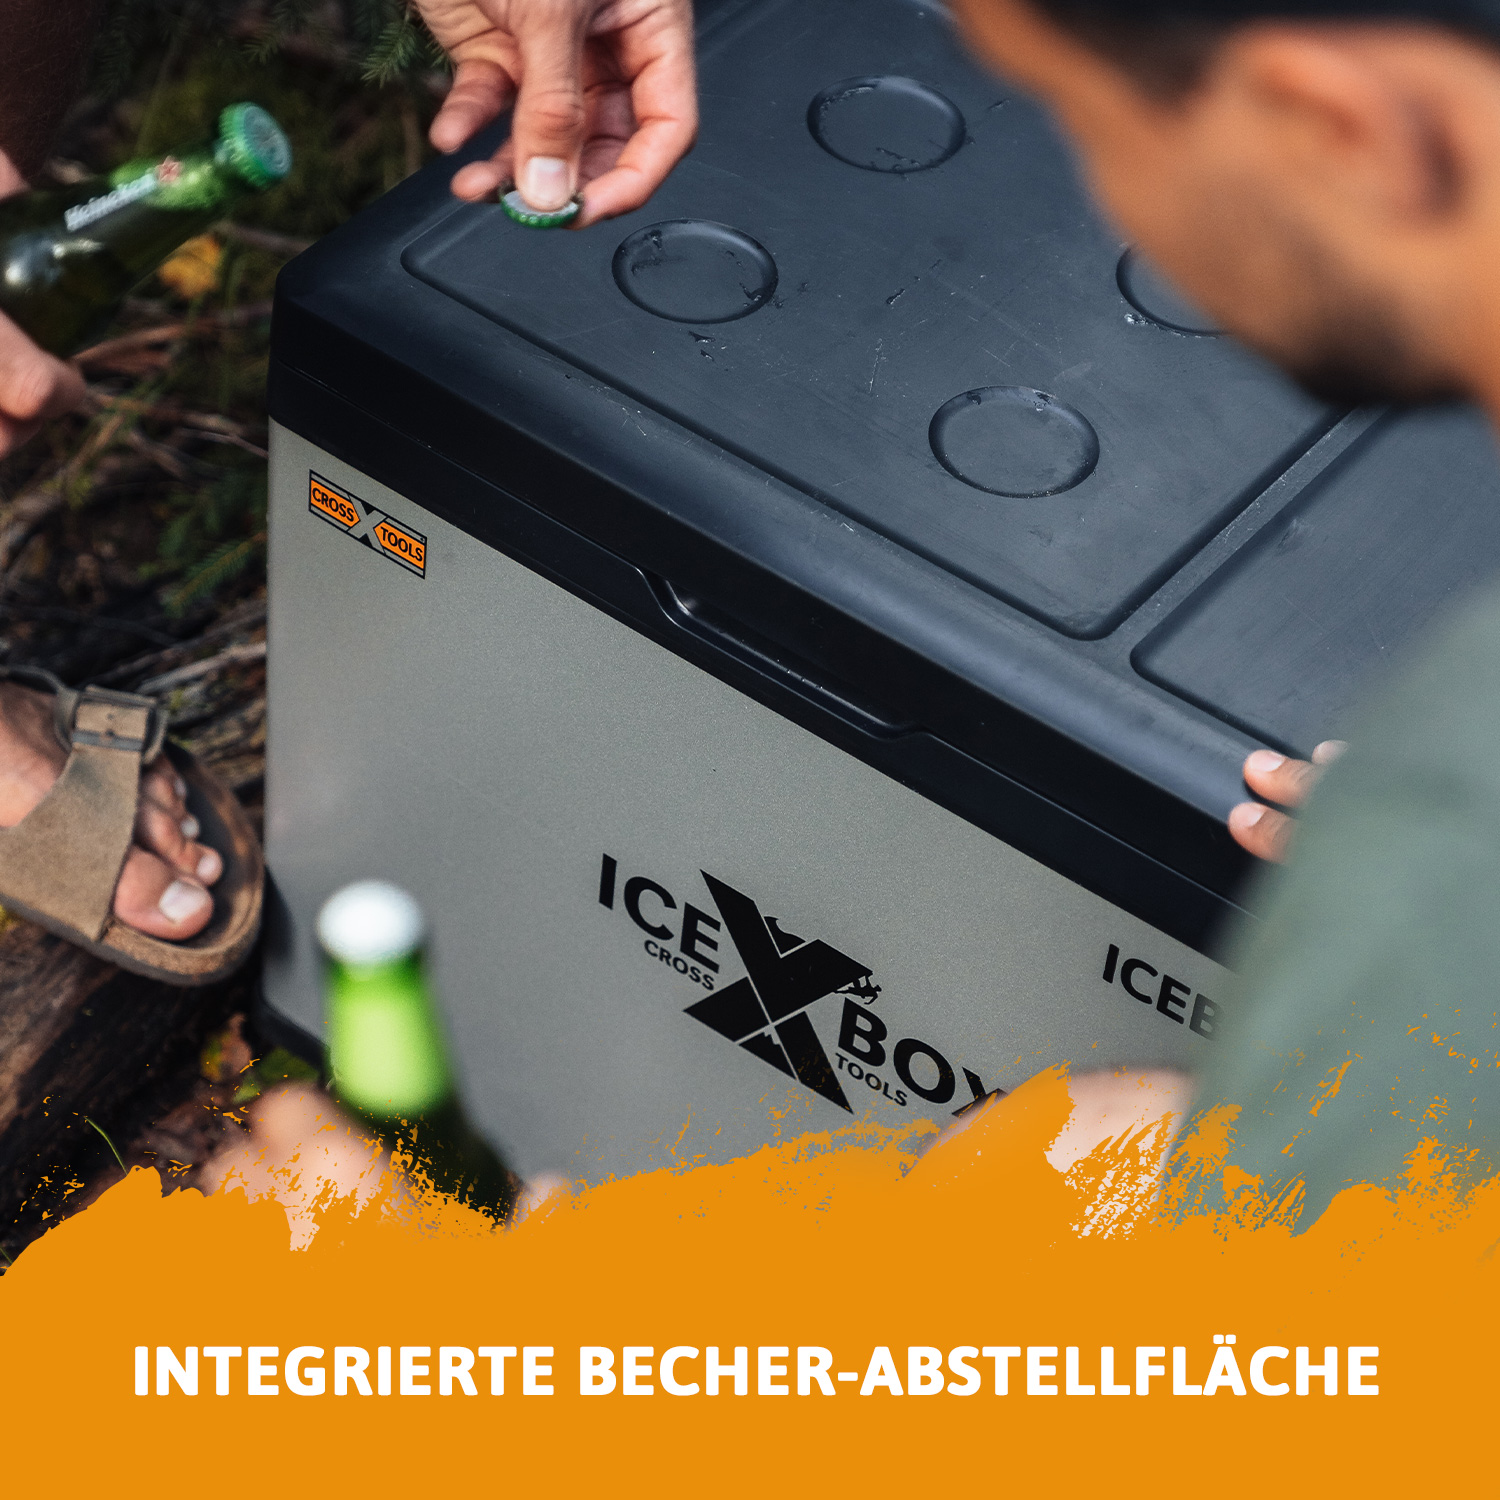 Kompressor-Kühlbox ICEBOX 40